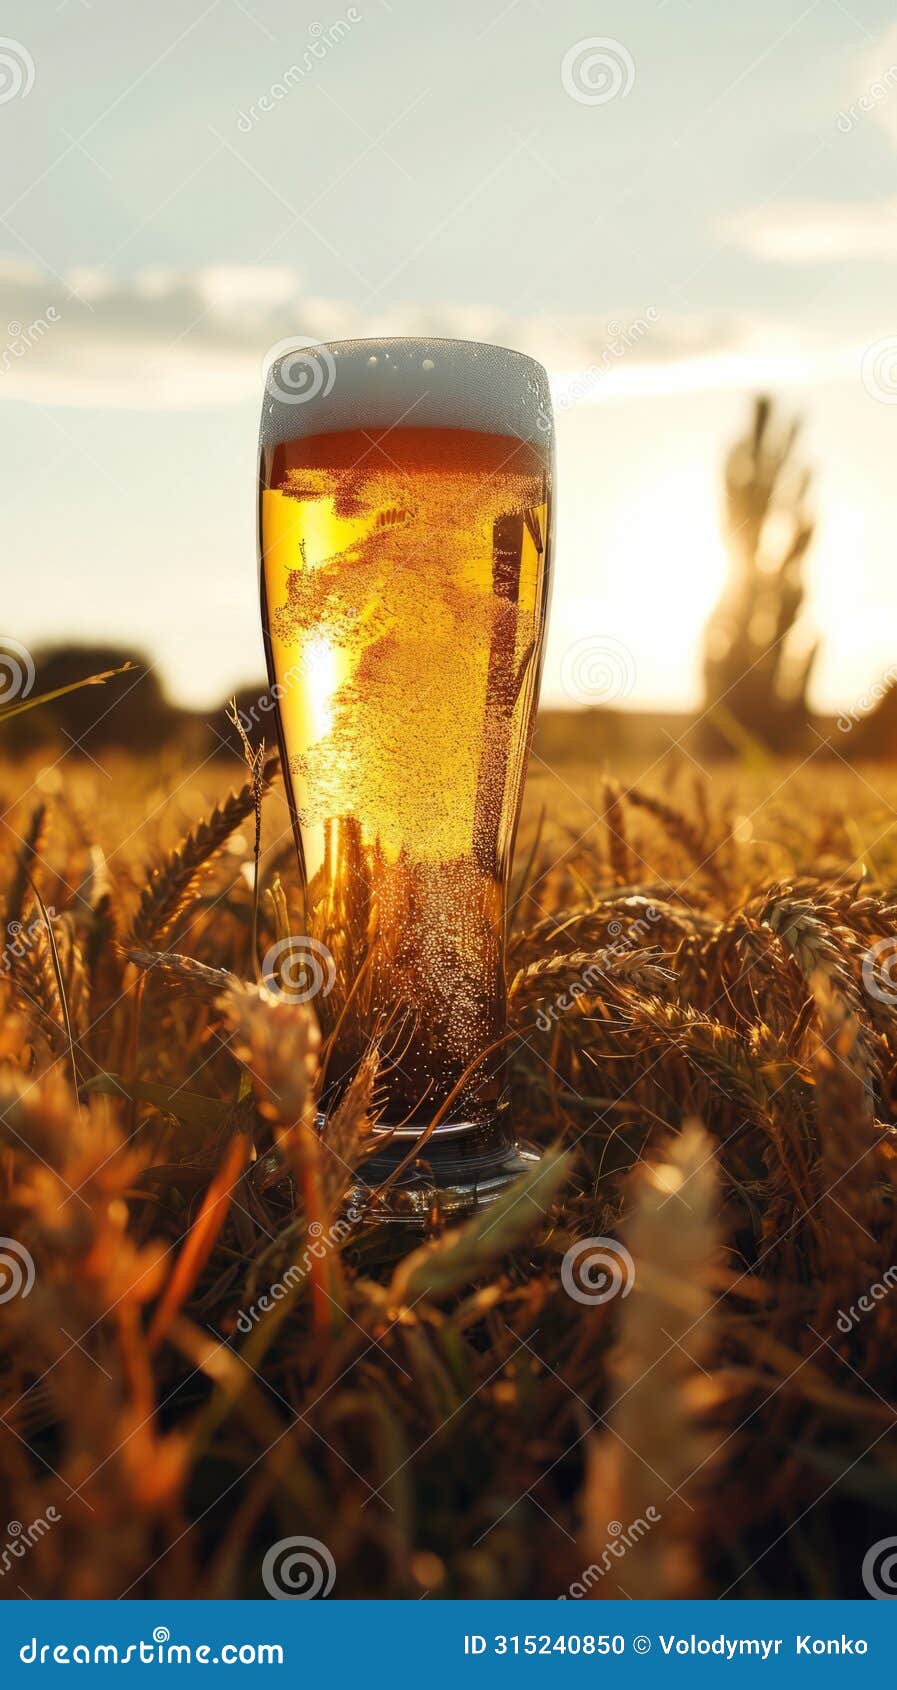 glass of beer in field, refreshing beverage amidst natural surroundings